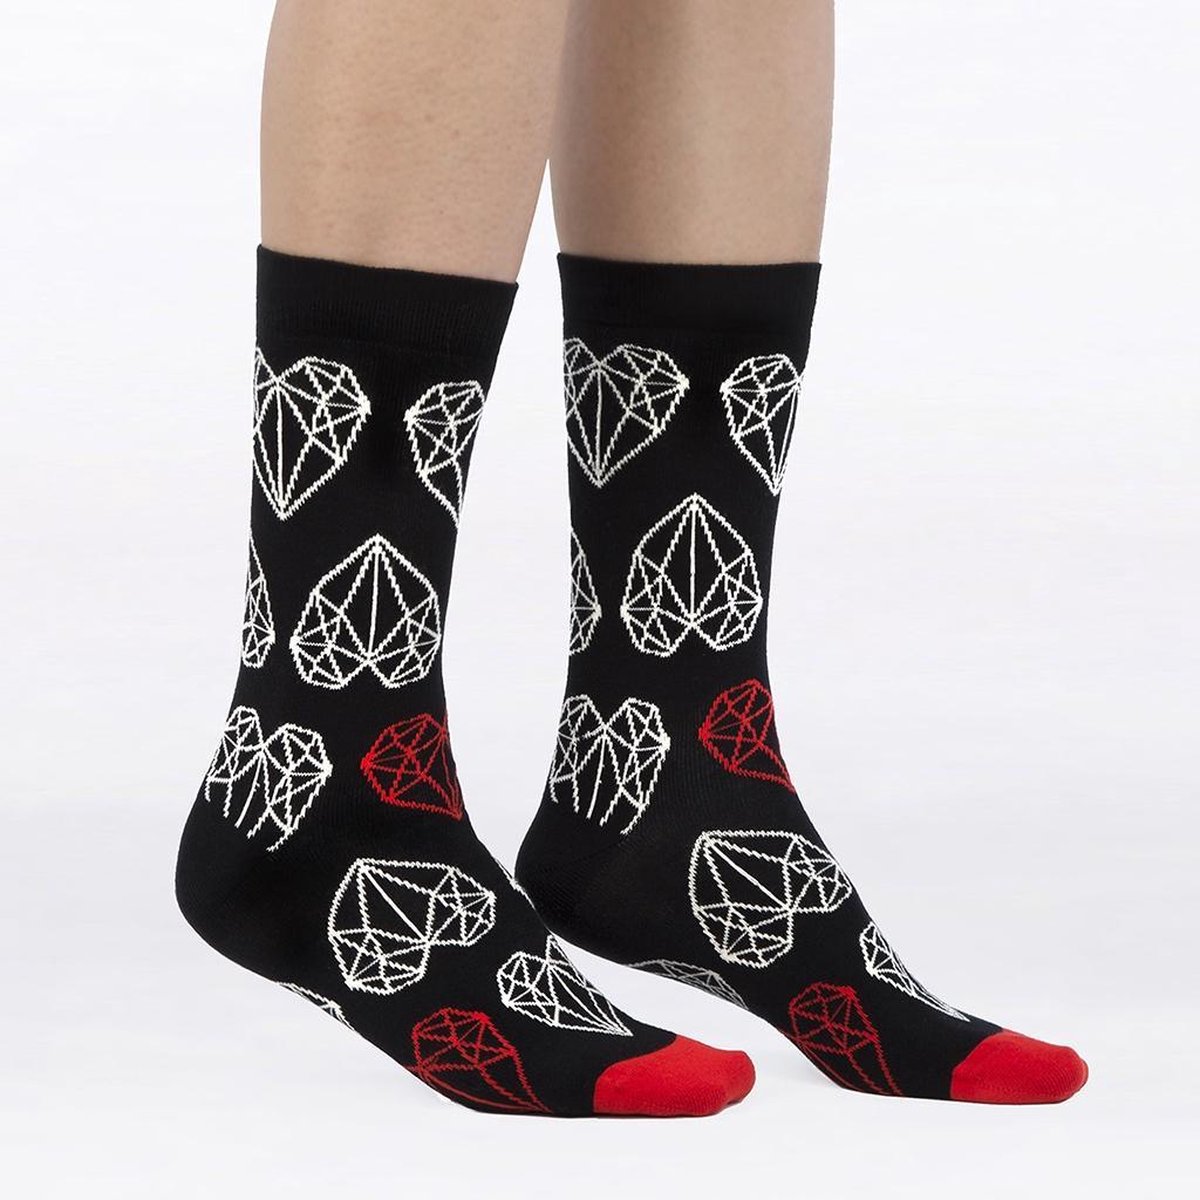 Ballonet Socks - DearYou / 41-46 - Fun sokken - diamant vorm afbeeldingen